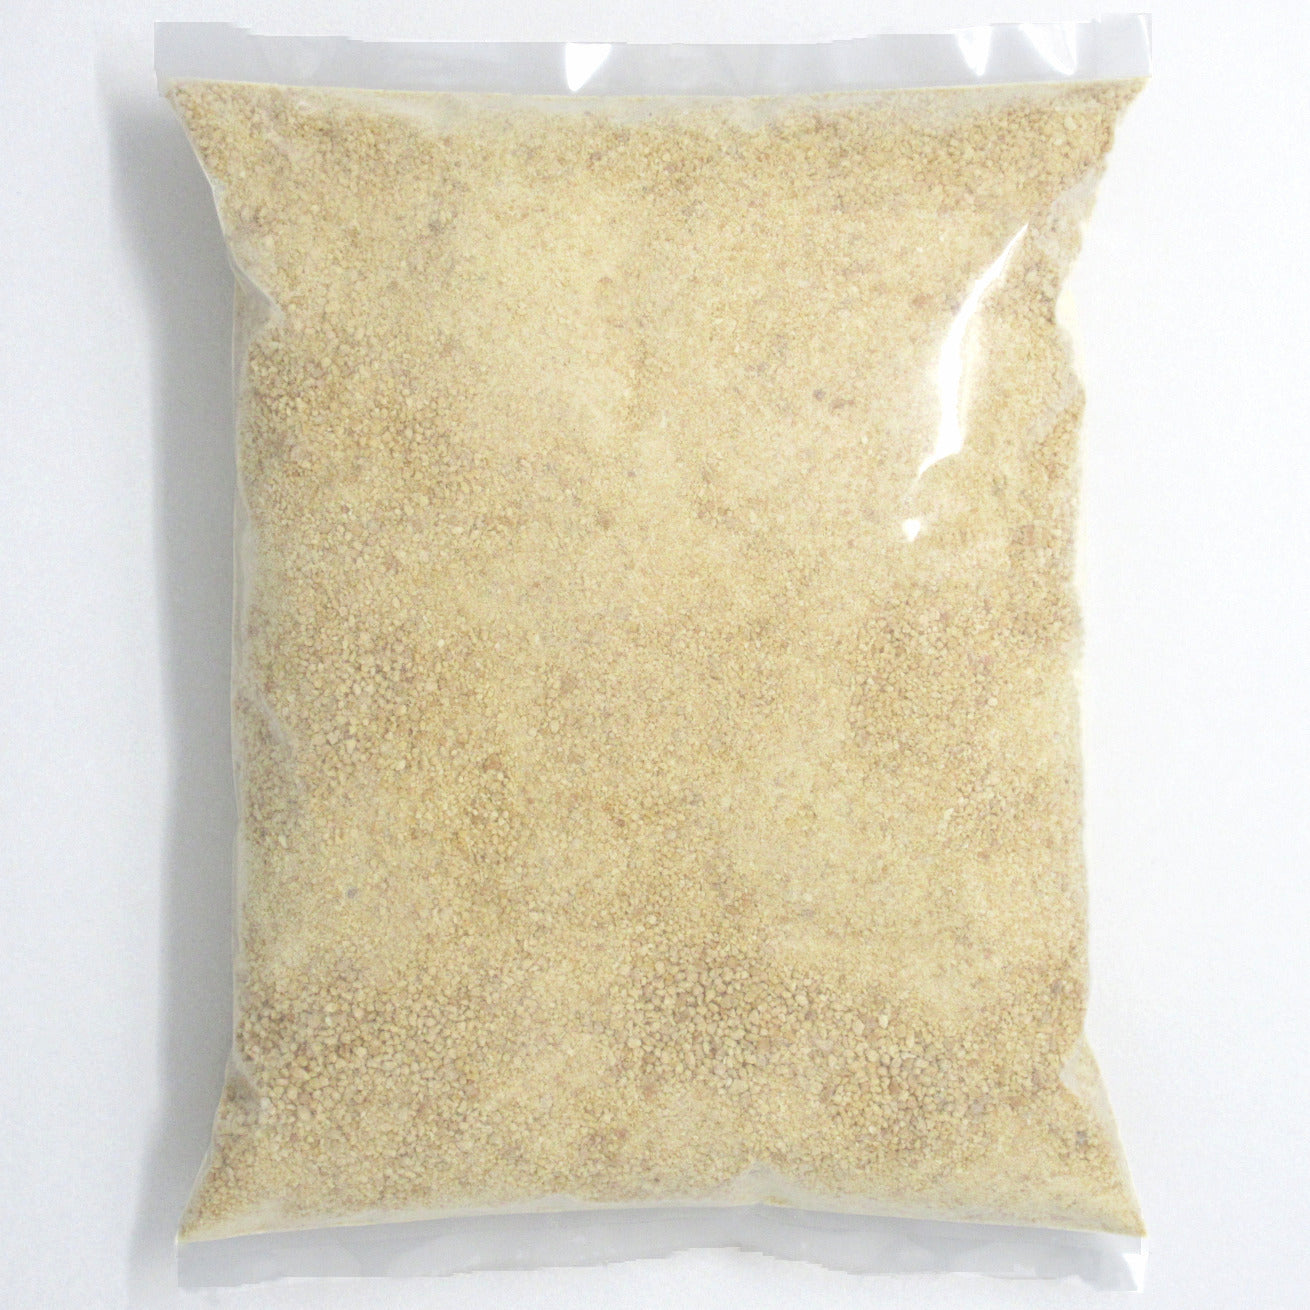 Flour Barrel product image - Honey Graham Crumbs